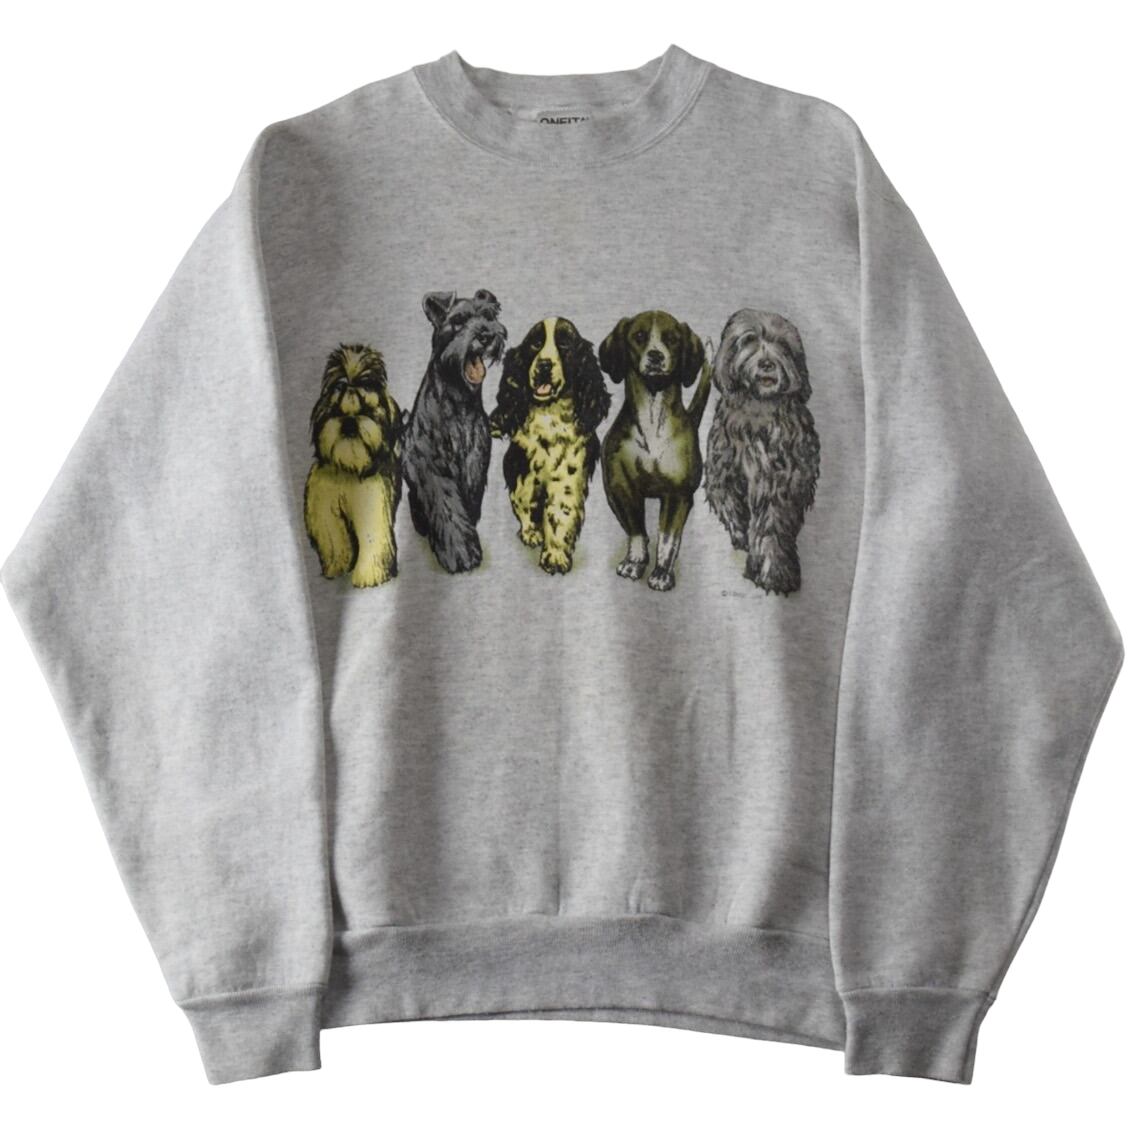 's "ONEITA" Vintage Both Side Animal Print Sweatshirt Made In